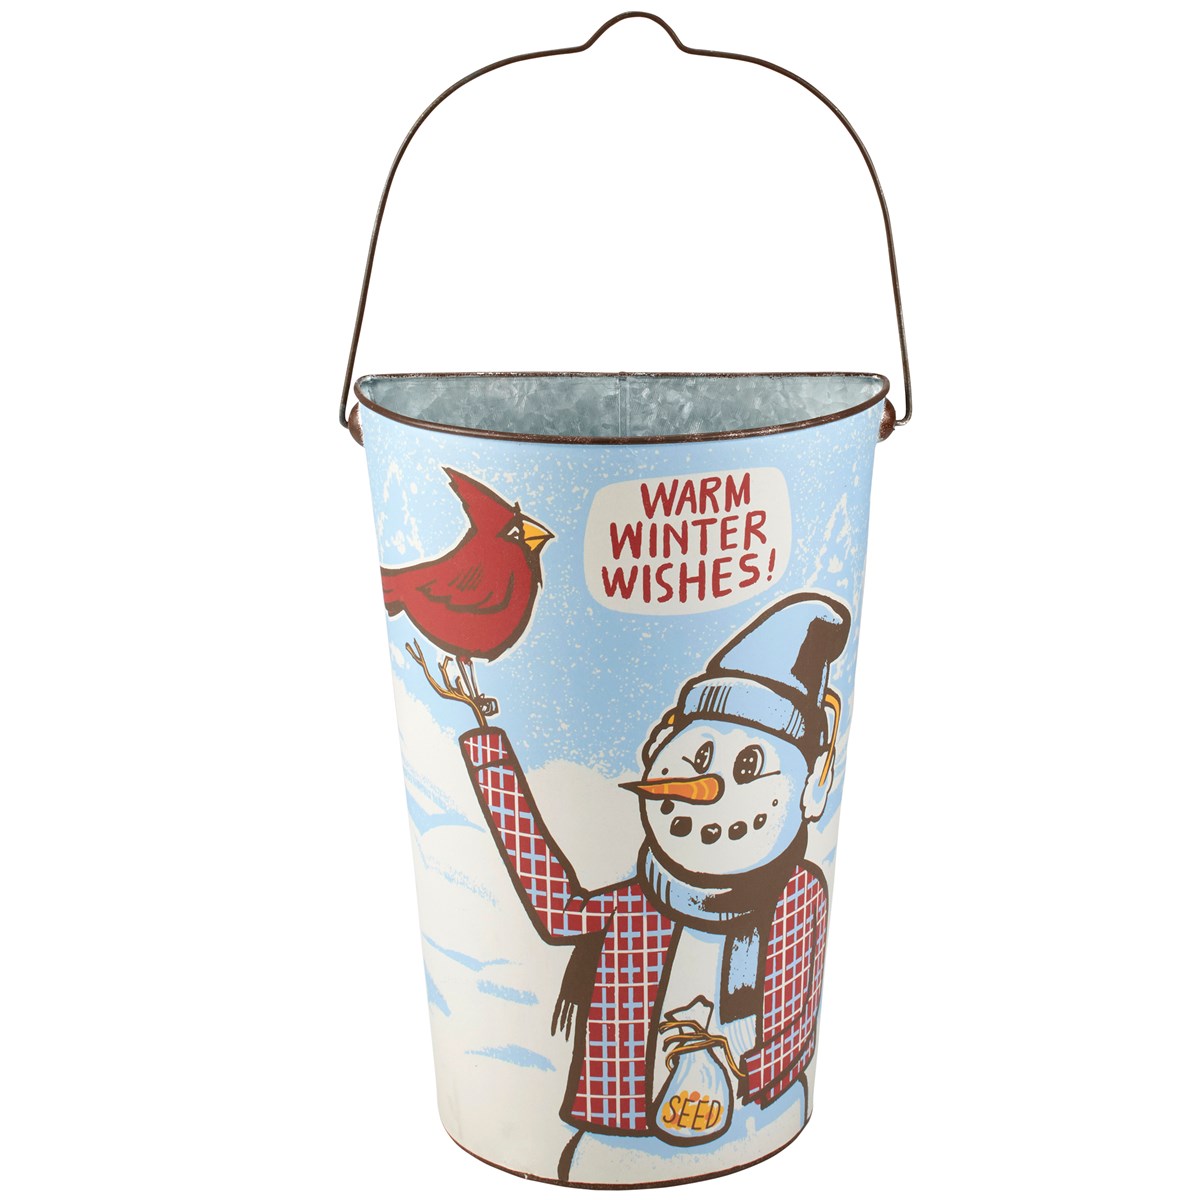 Warm Winter Wishes Wall Bucket - Metal, Paper